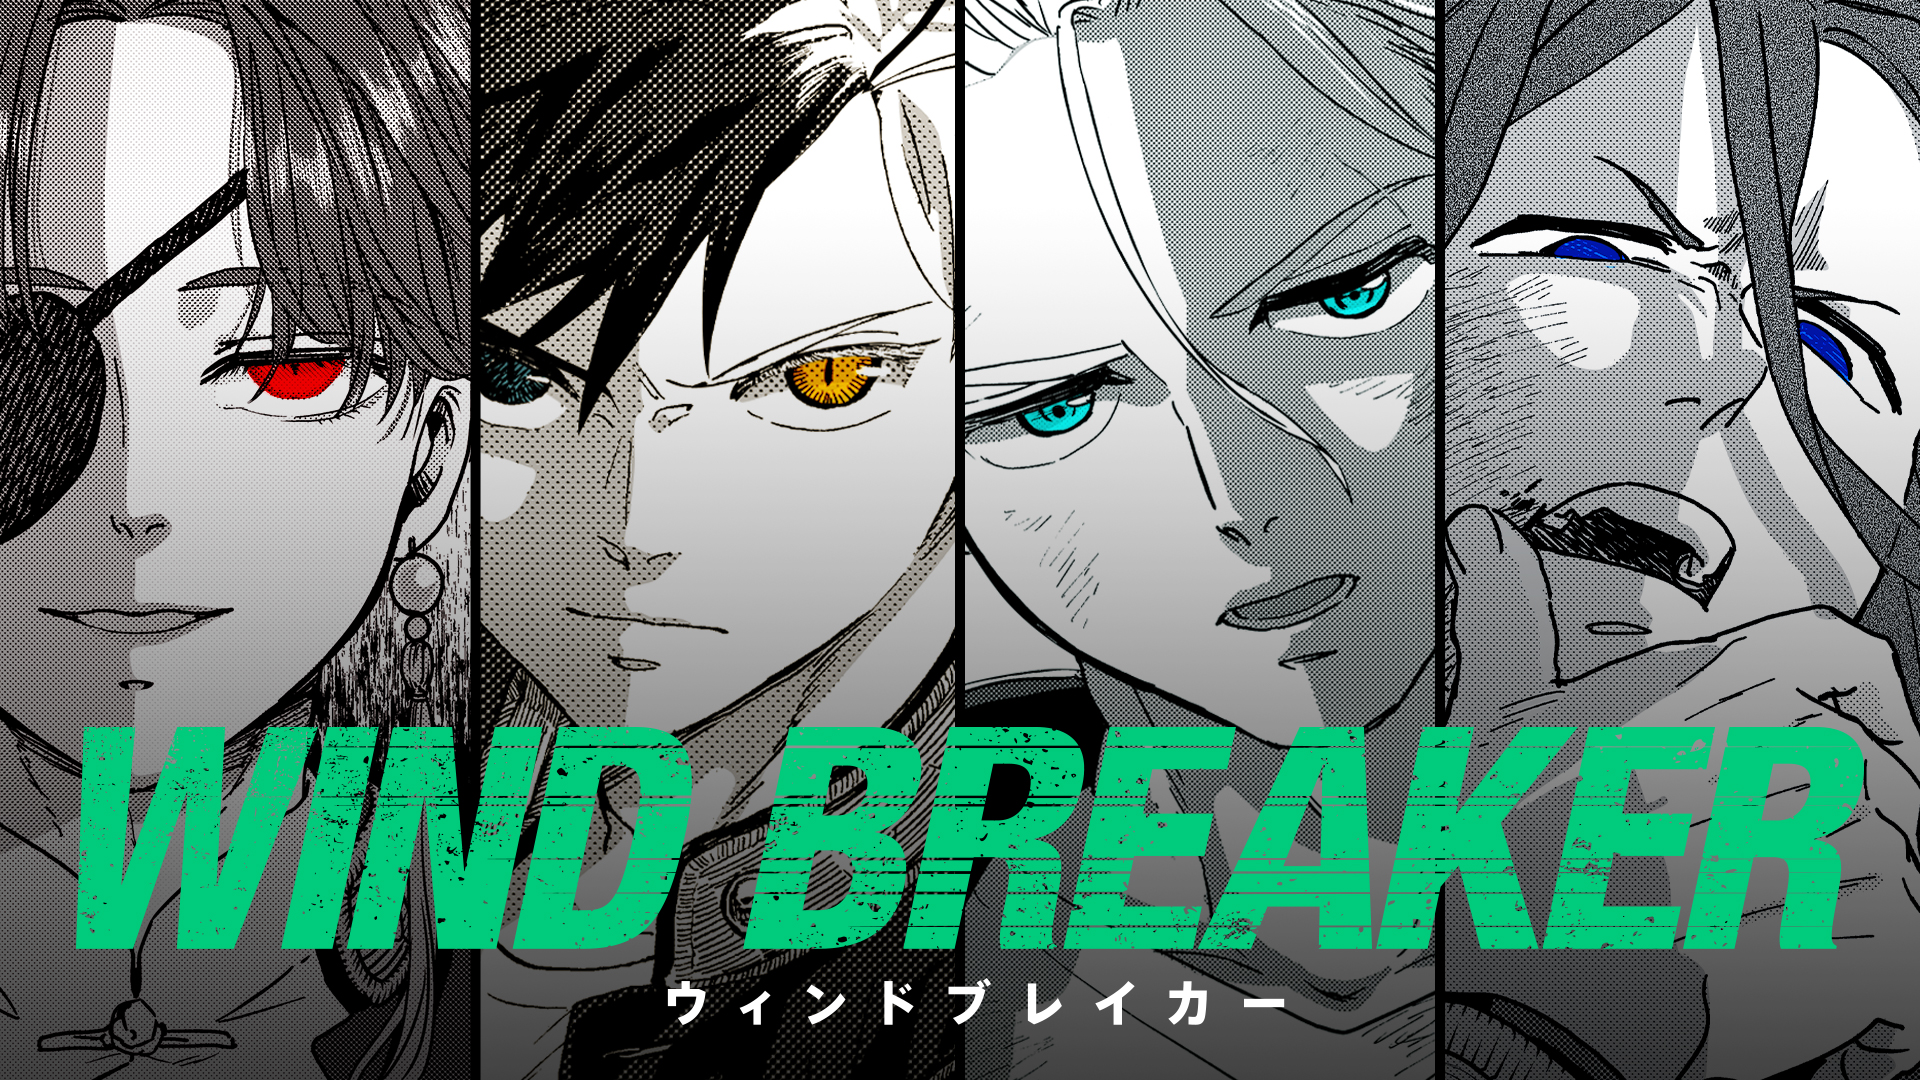 Delinquent School Manga WIND BREAKER Gets TV Anime Adaptation